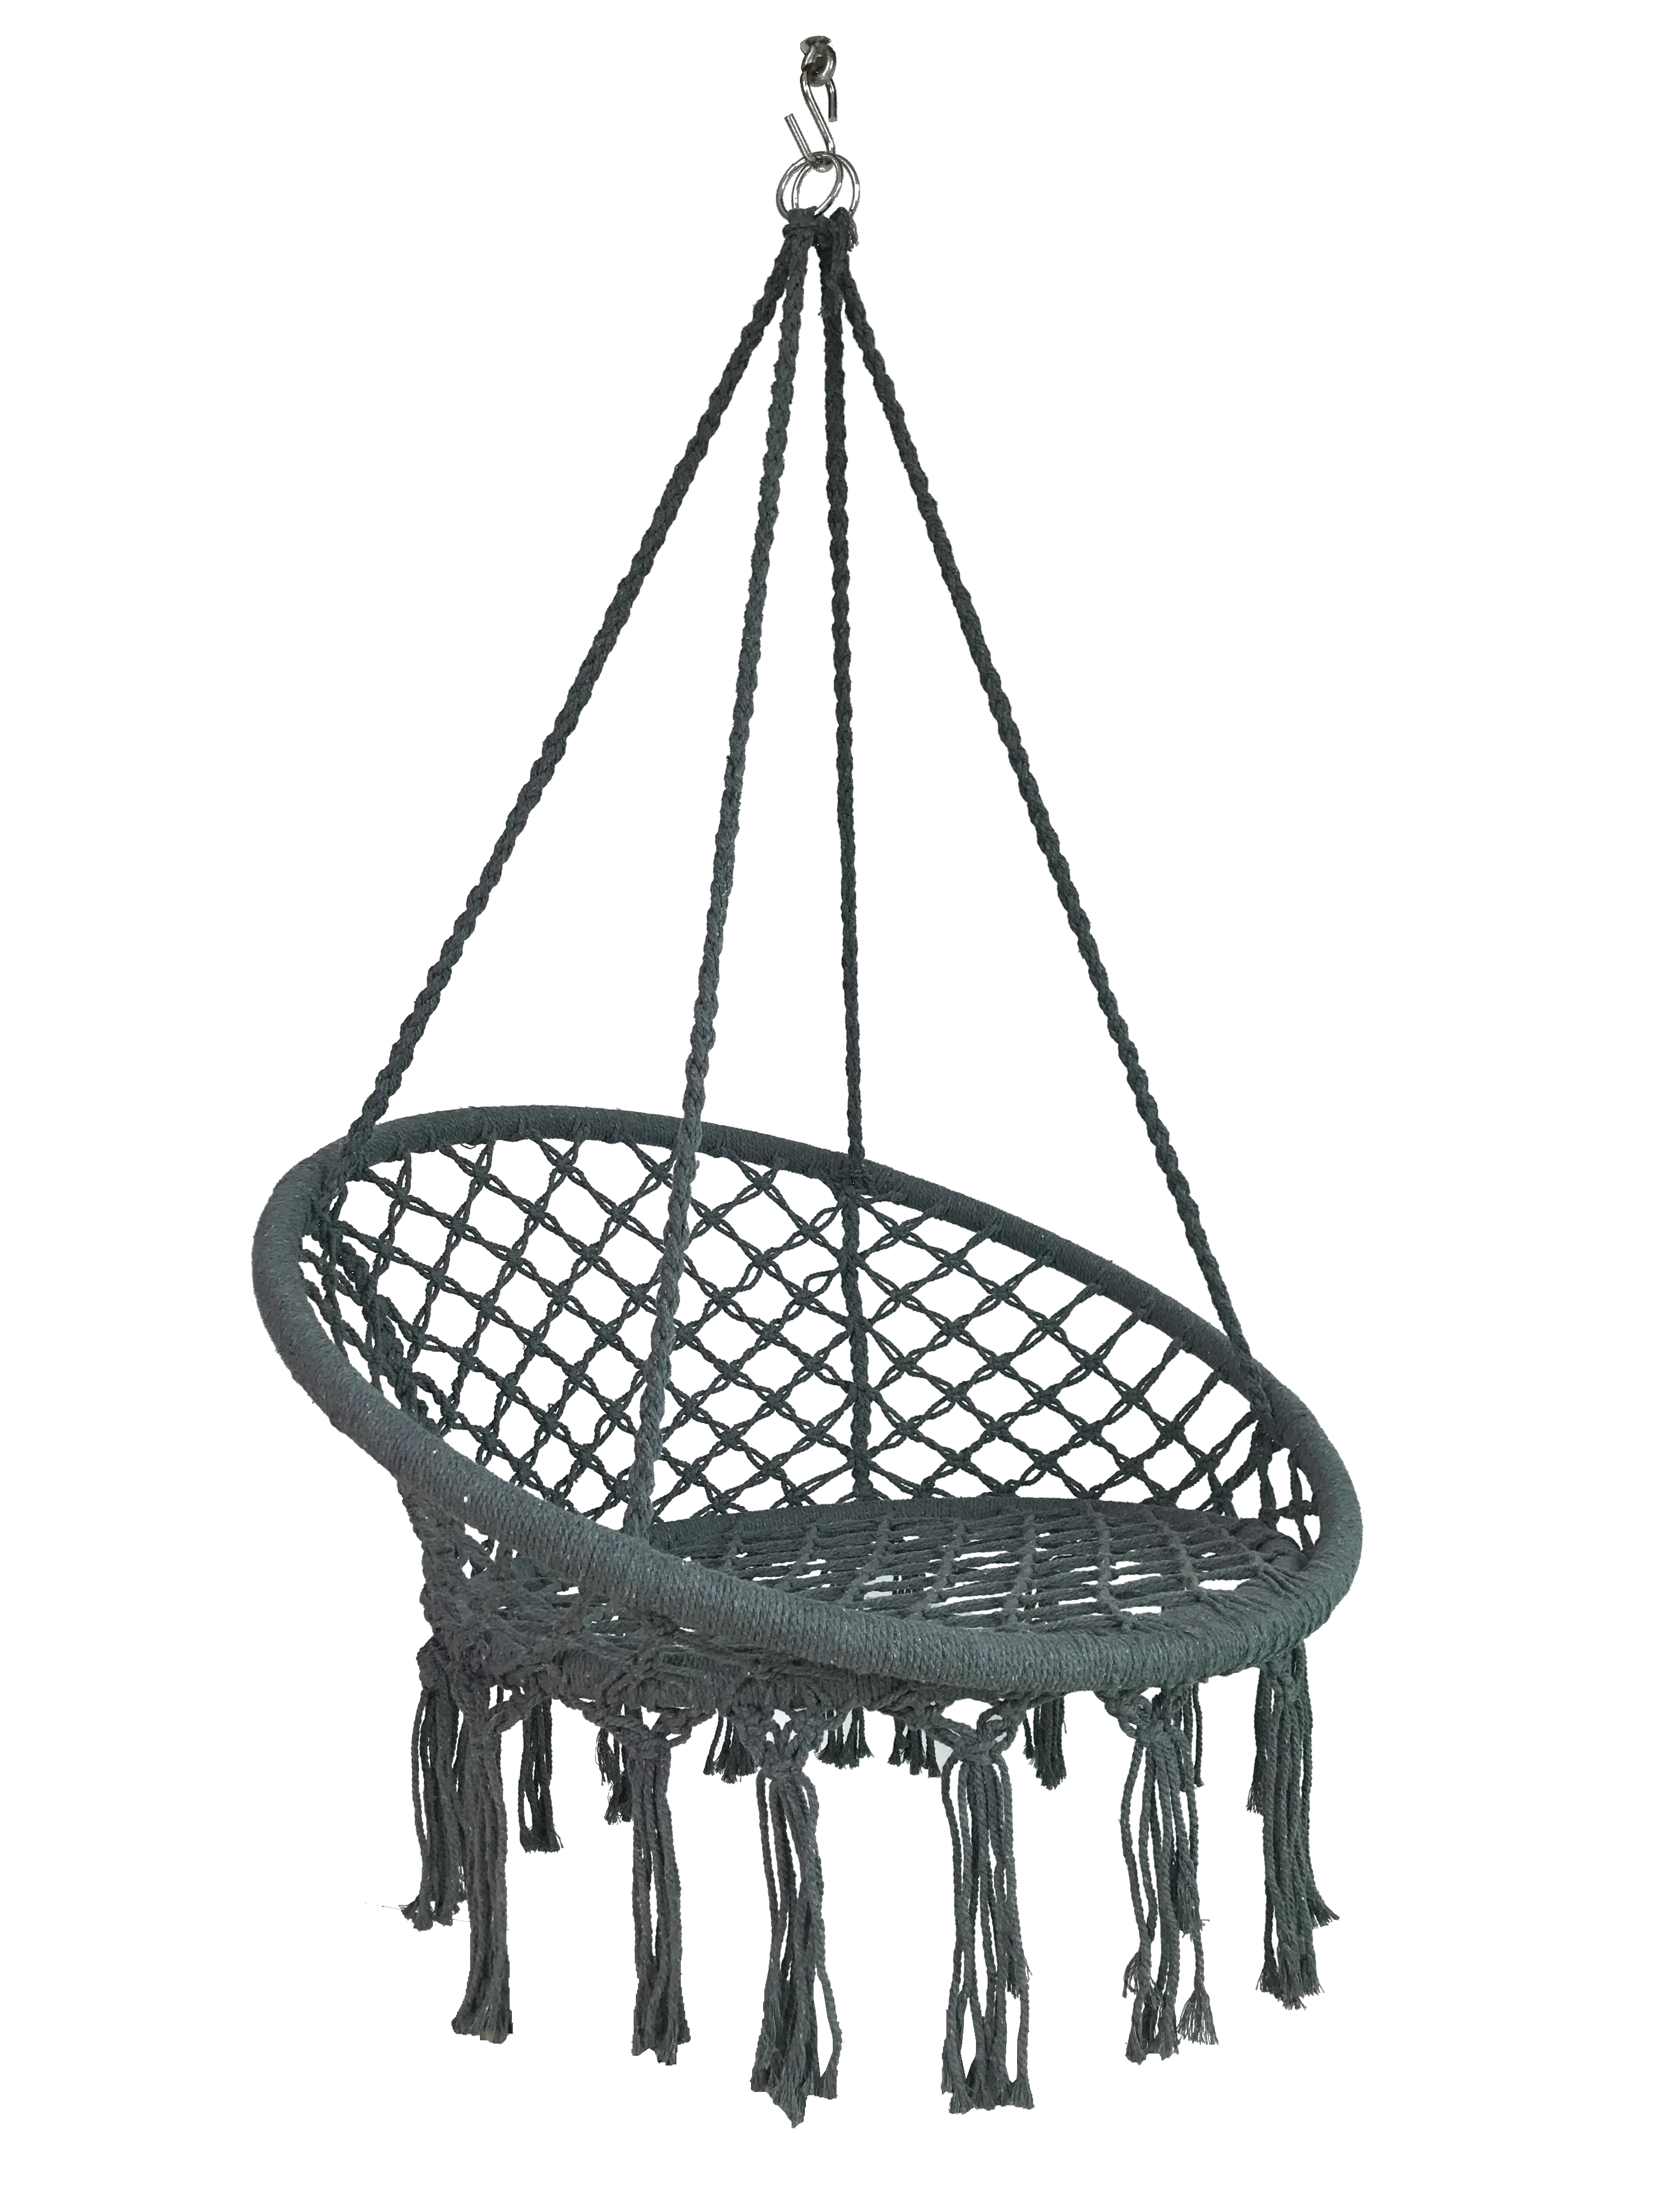 Wholesale Basket Steel Wicker Rattan Swing Seat Furniture Outdoor Patio Swing Chair Hanging Garden Swing Chair